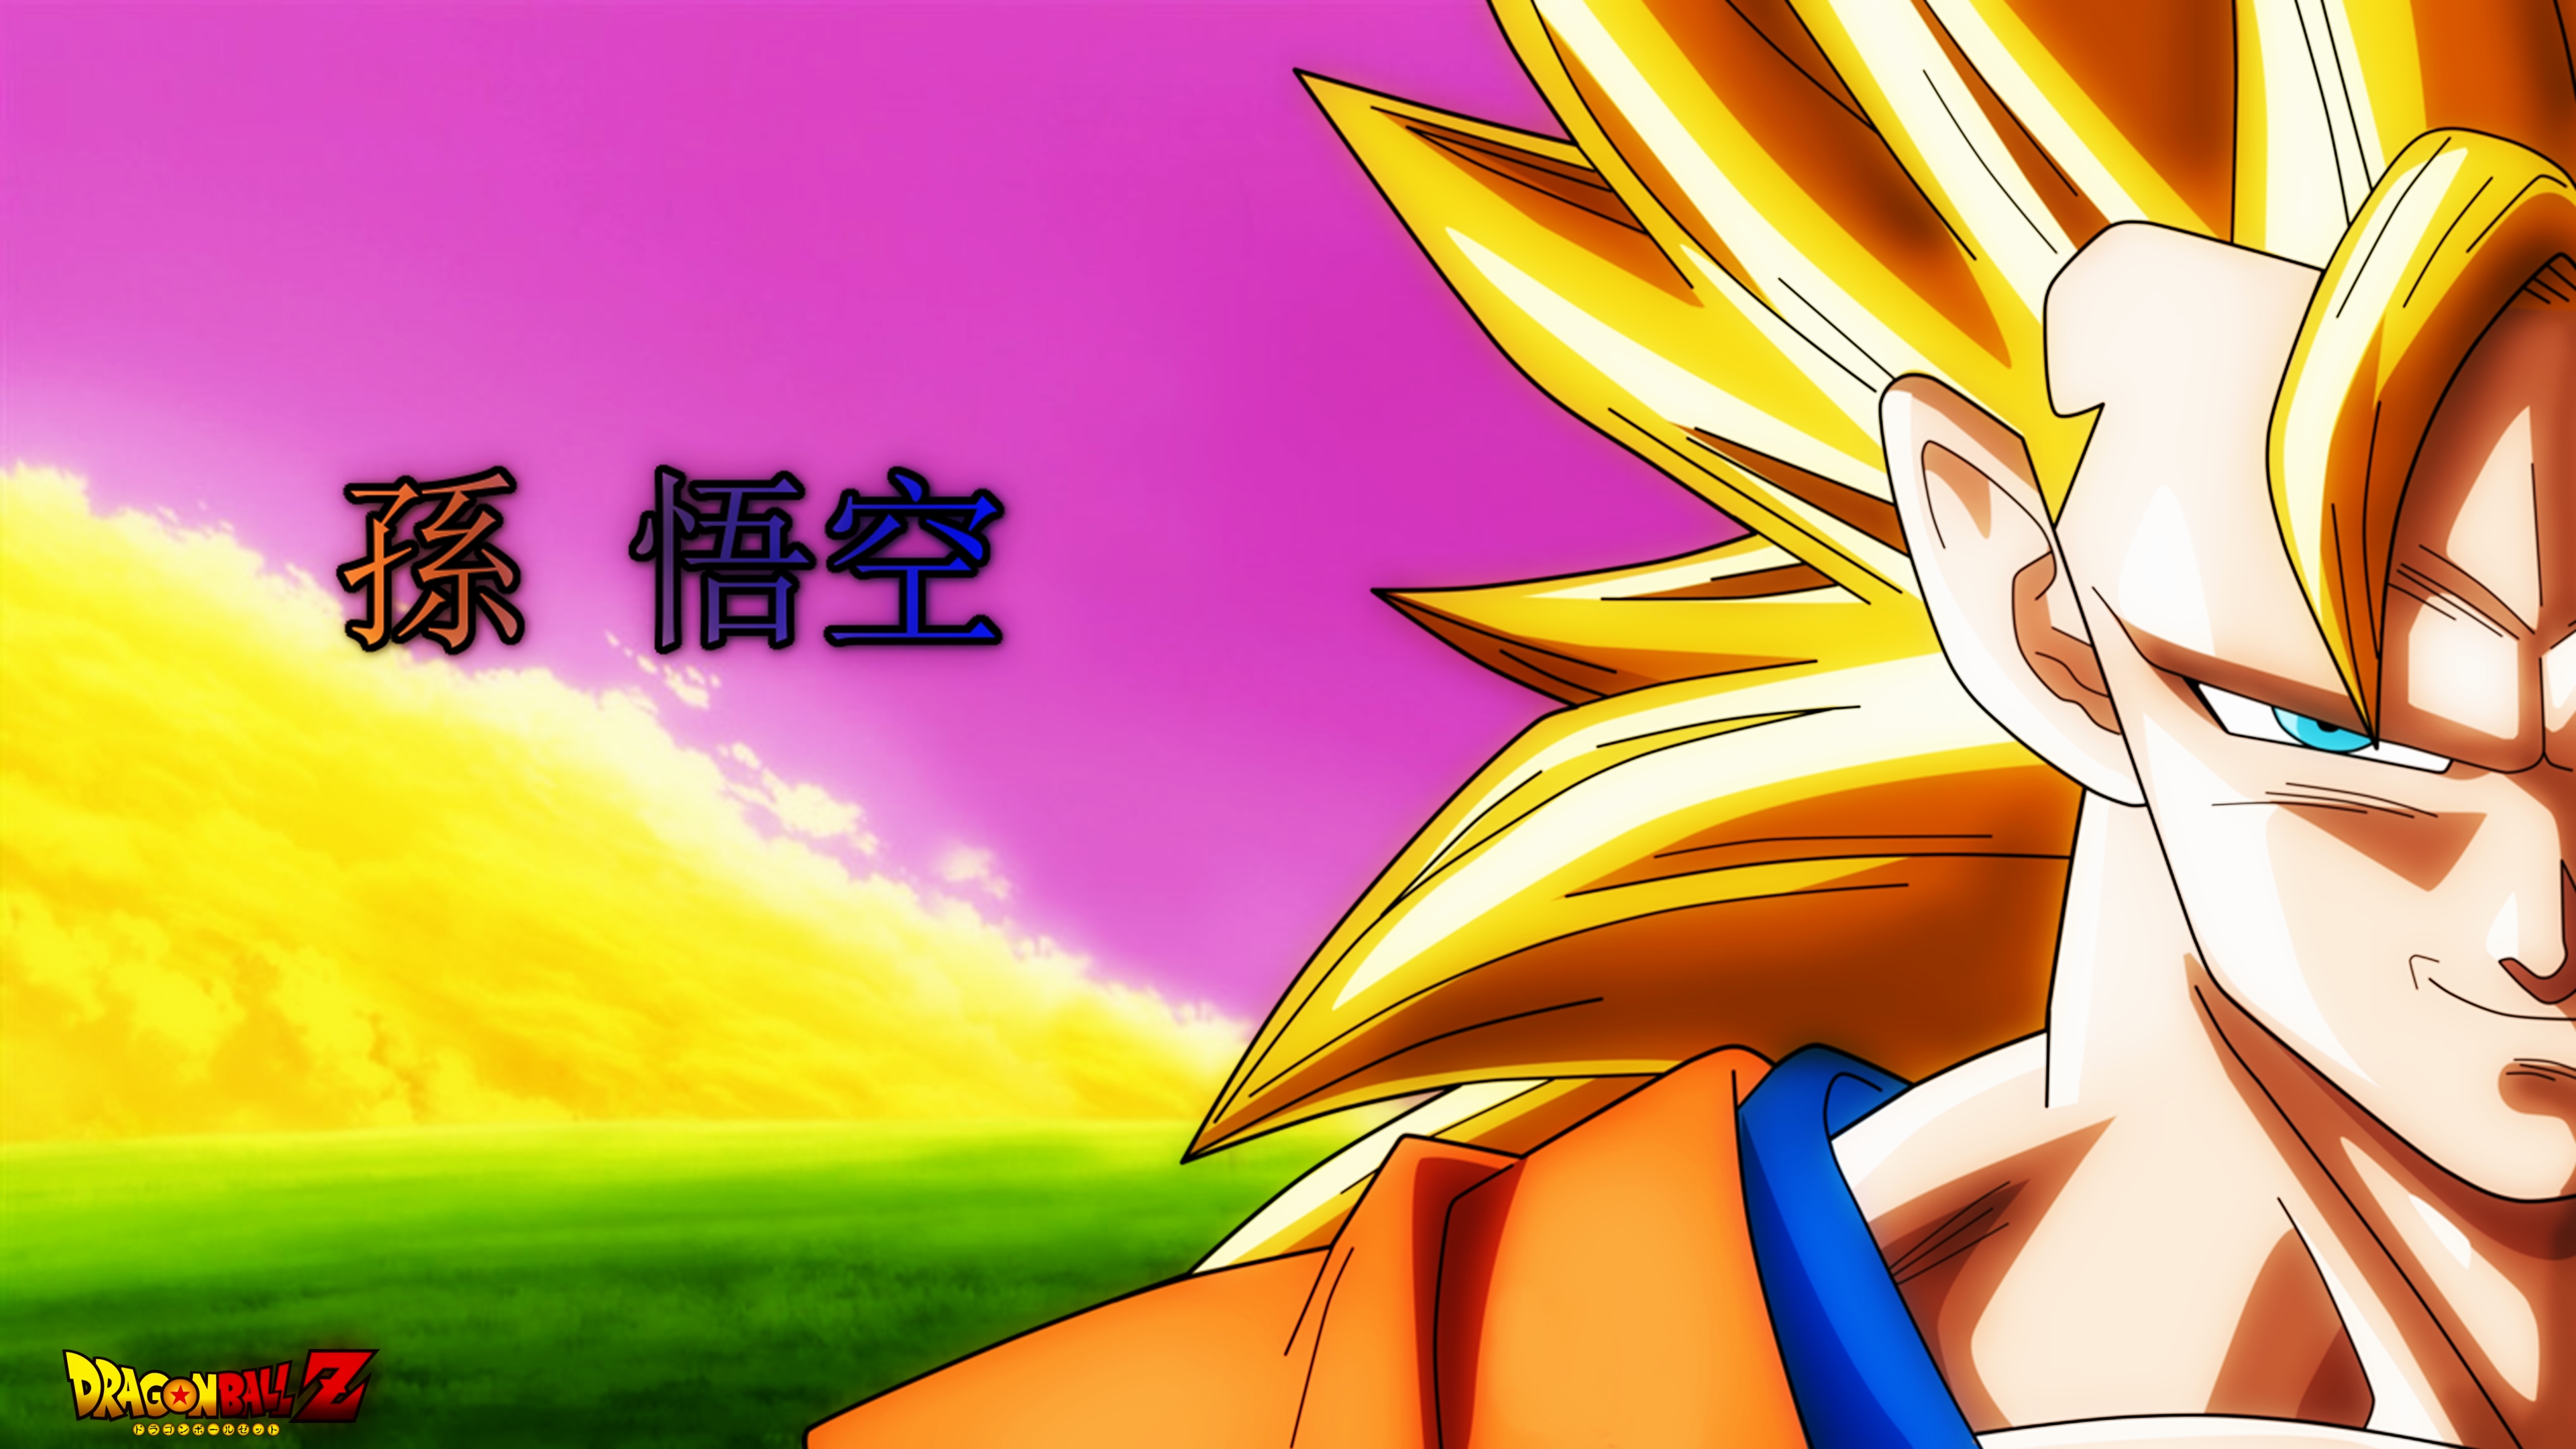 Dragonball Z Goku Super Saiyan Wallpaper 4k By